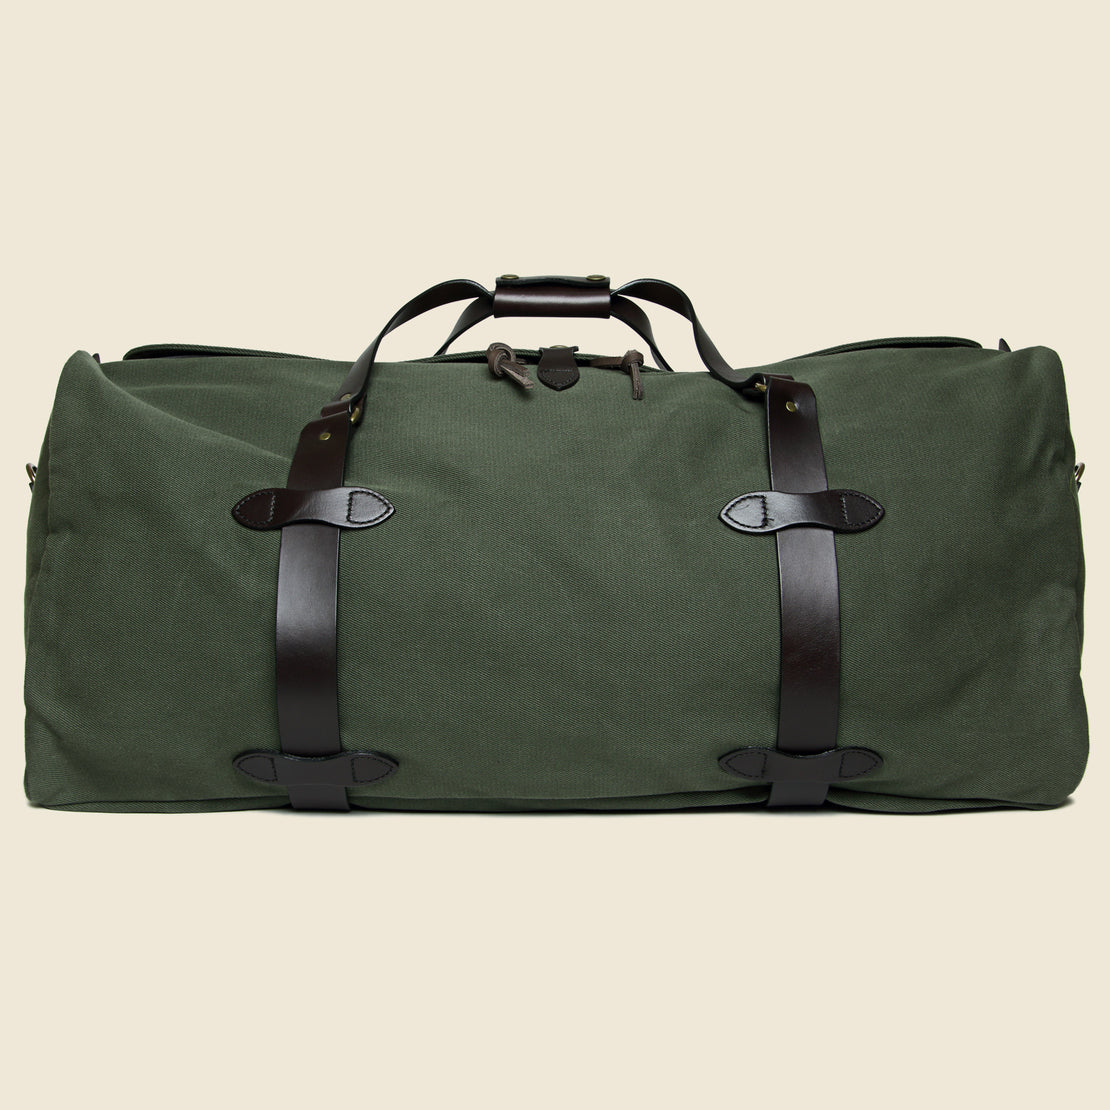 Filson Large Duffle Bag - Otter Green